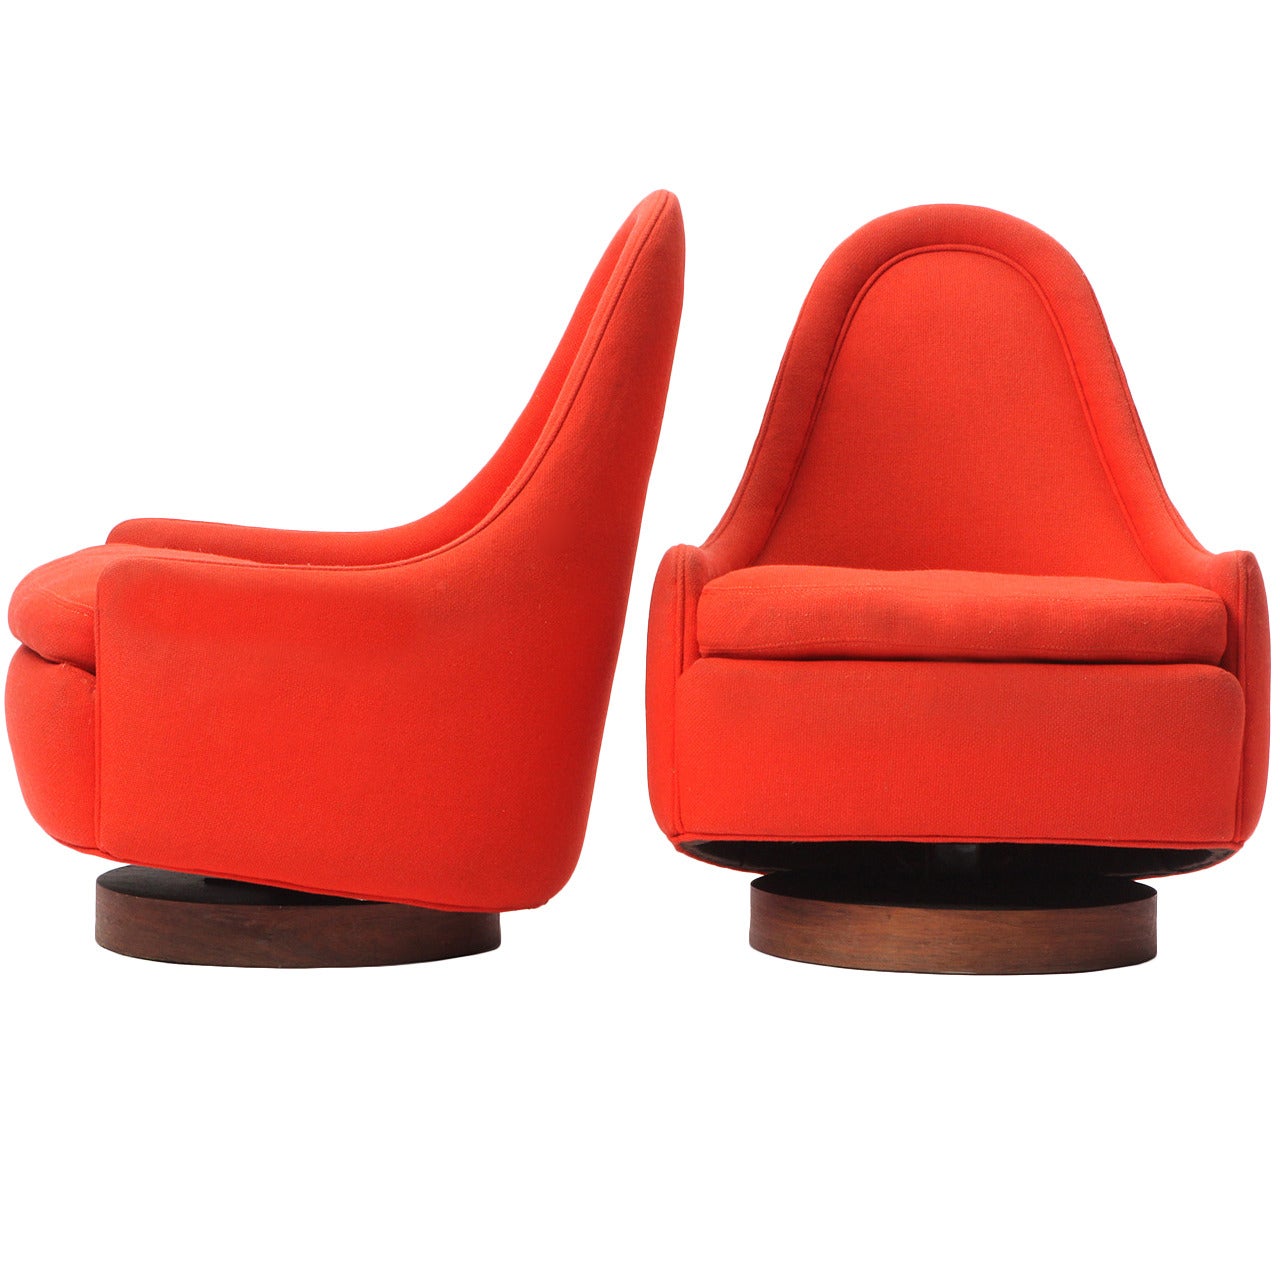 Swiveling Lounge Chairs By Milo Baughman